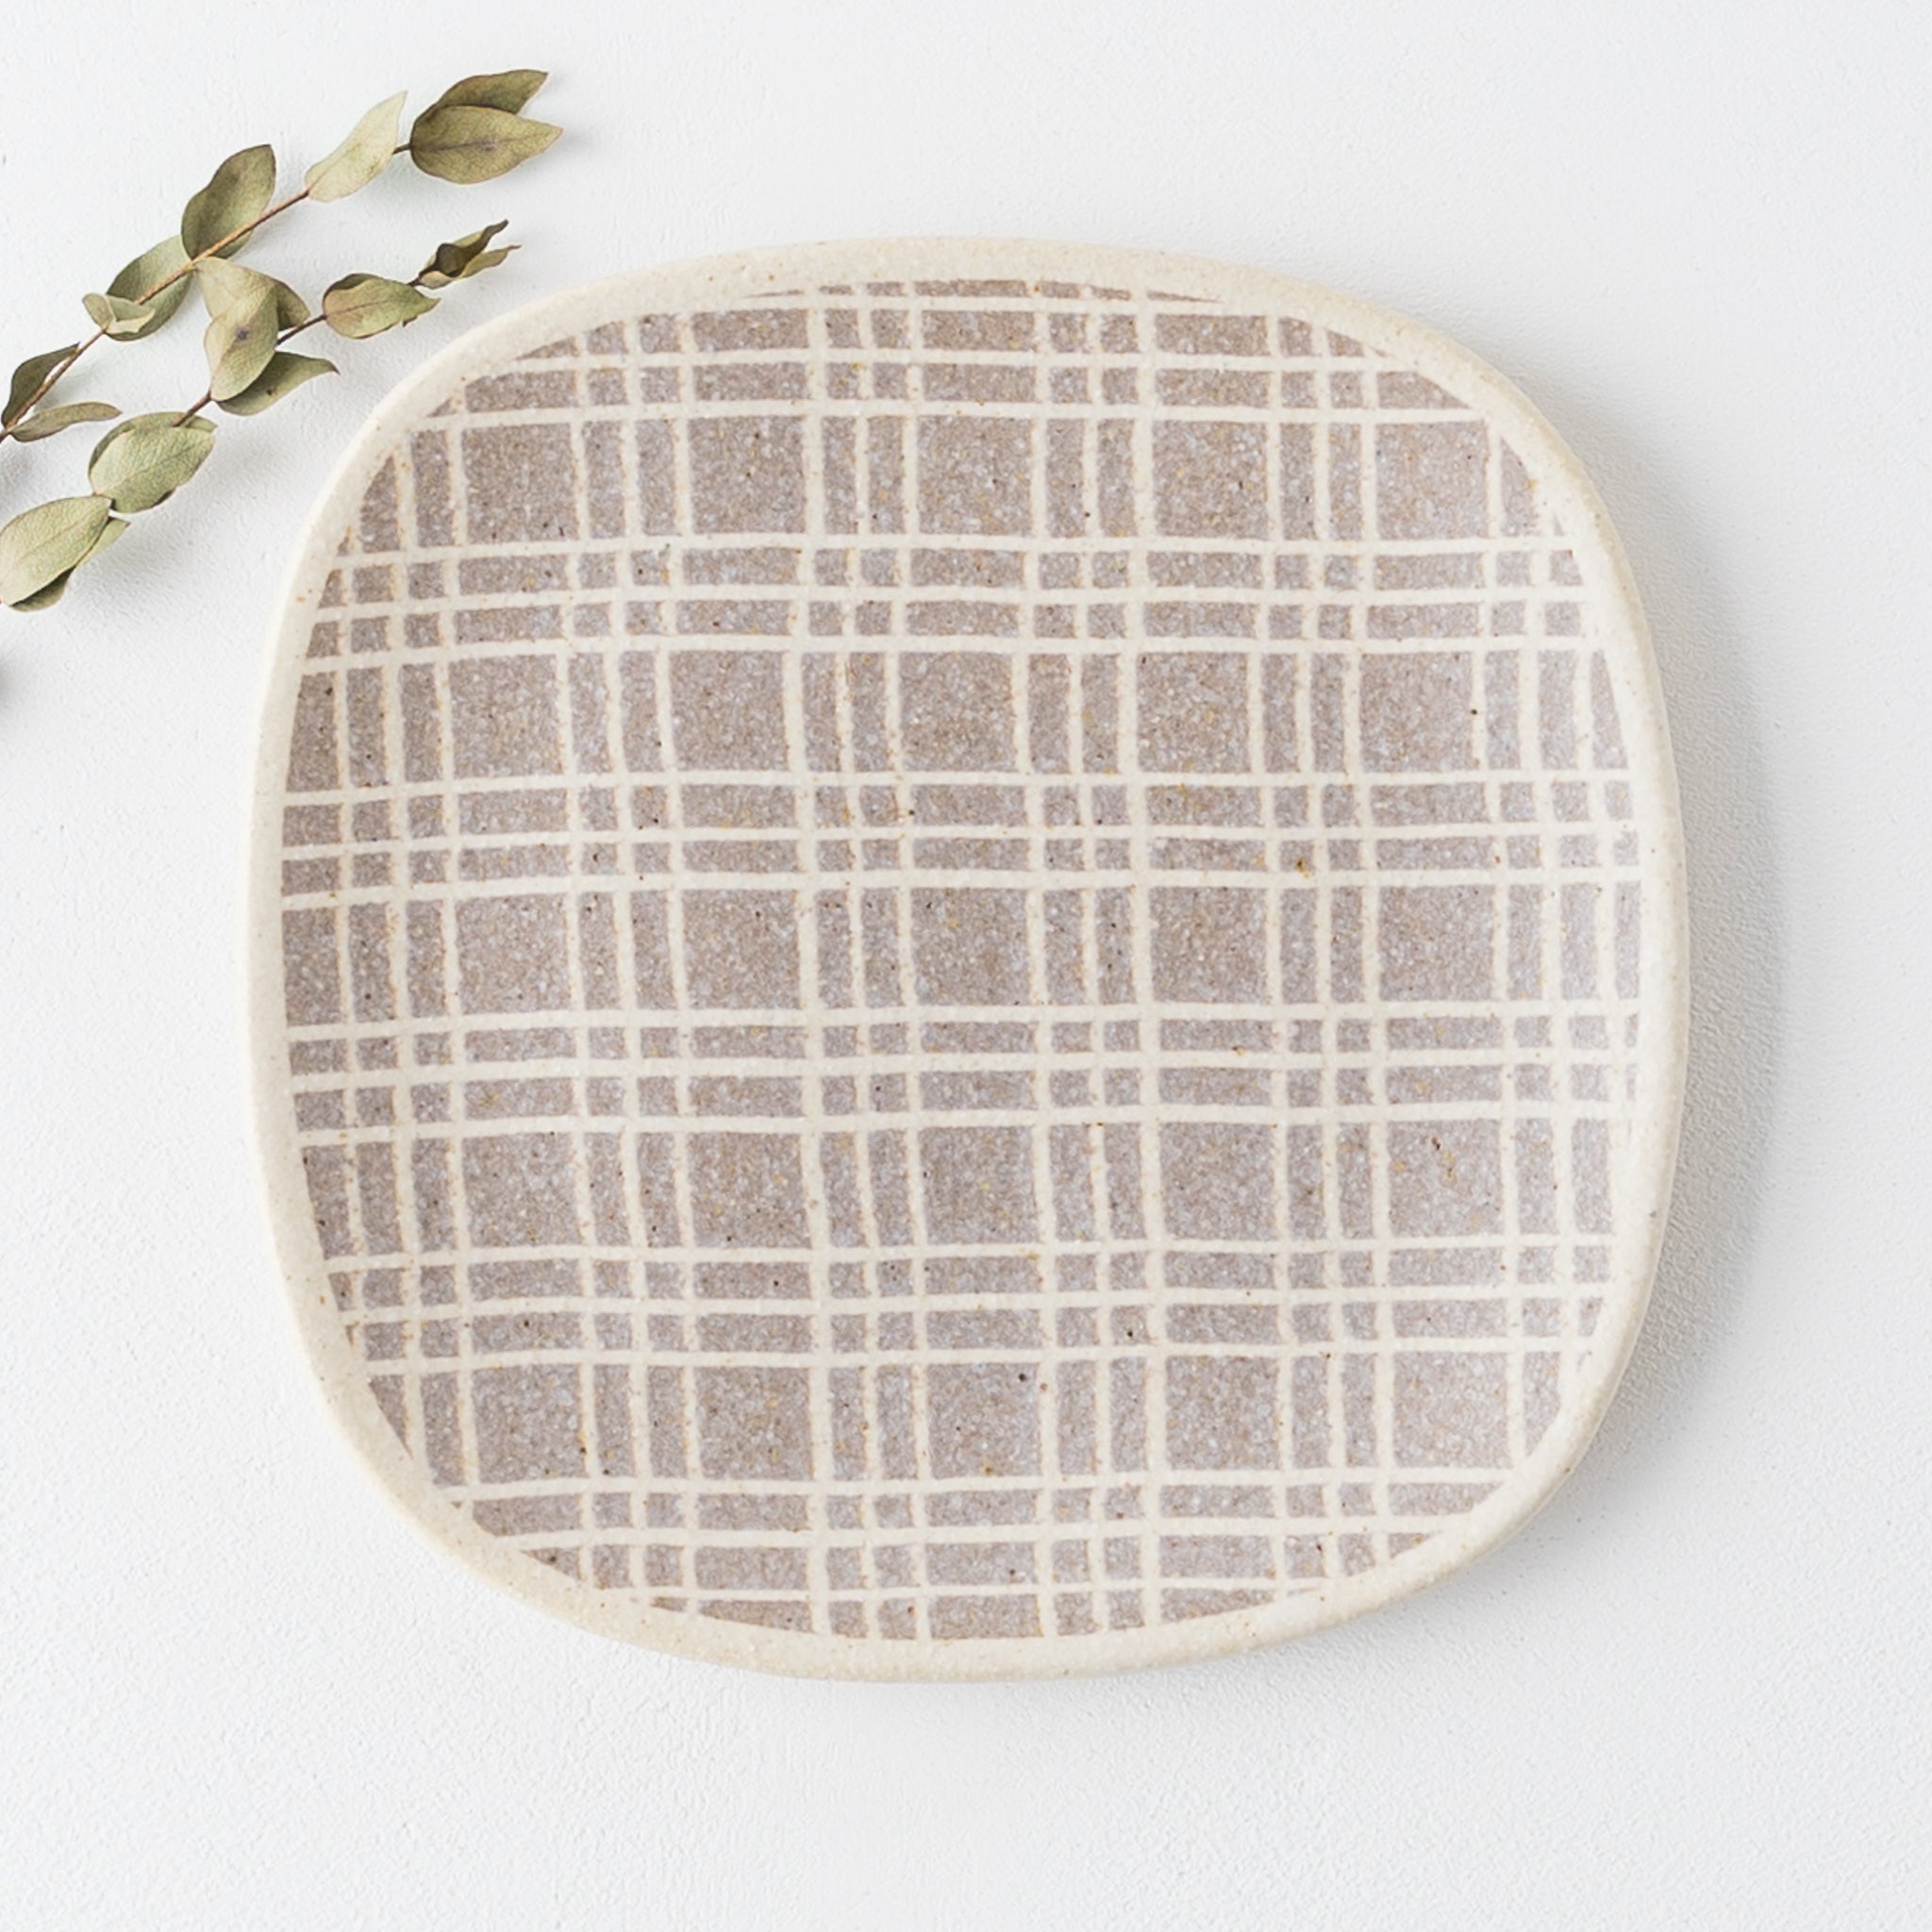 Hanako Sakashita's kneaded square plate perfect for bread lovers